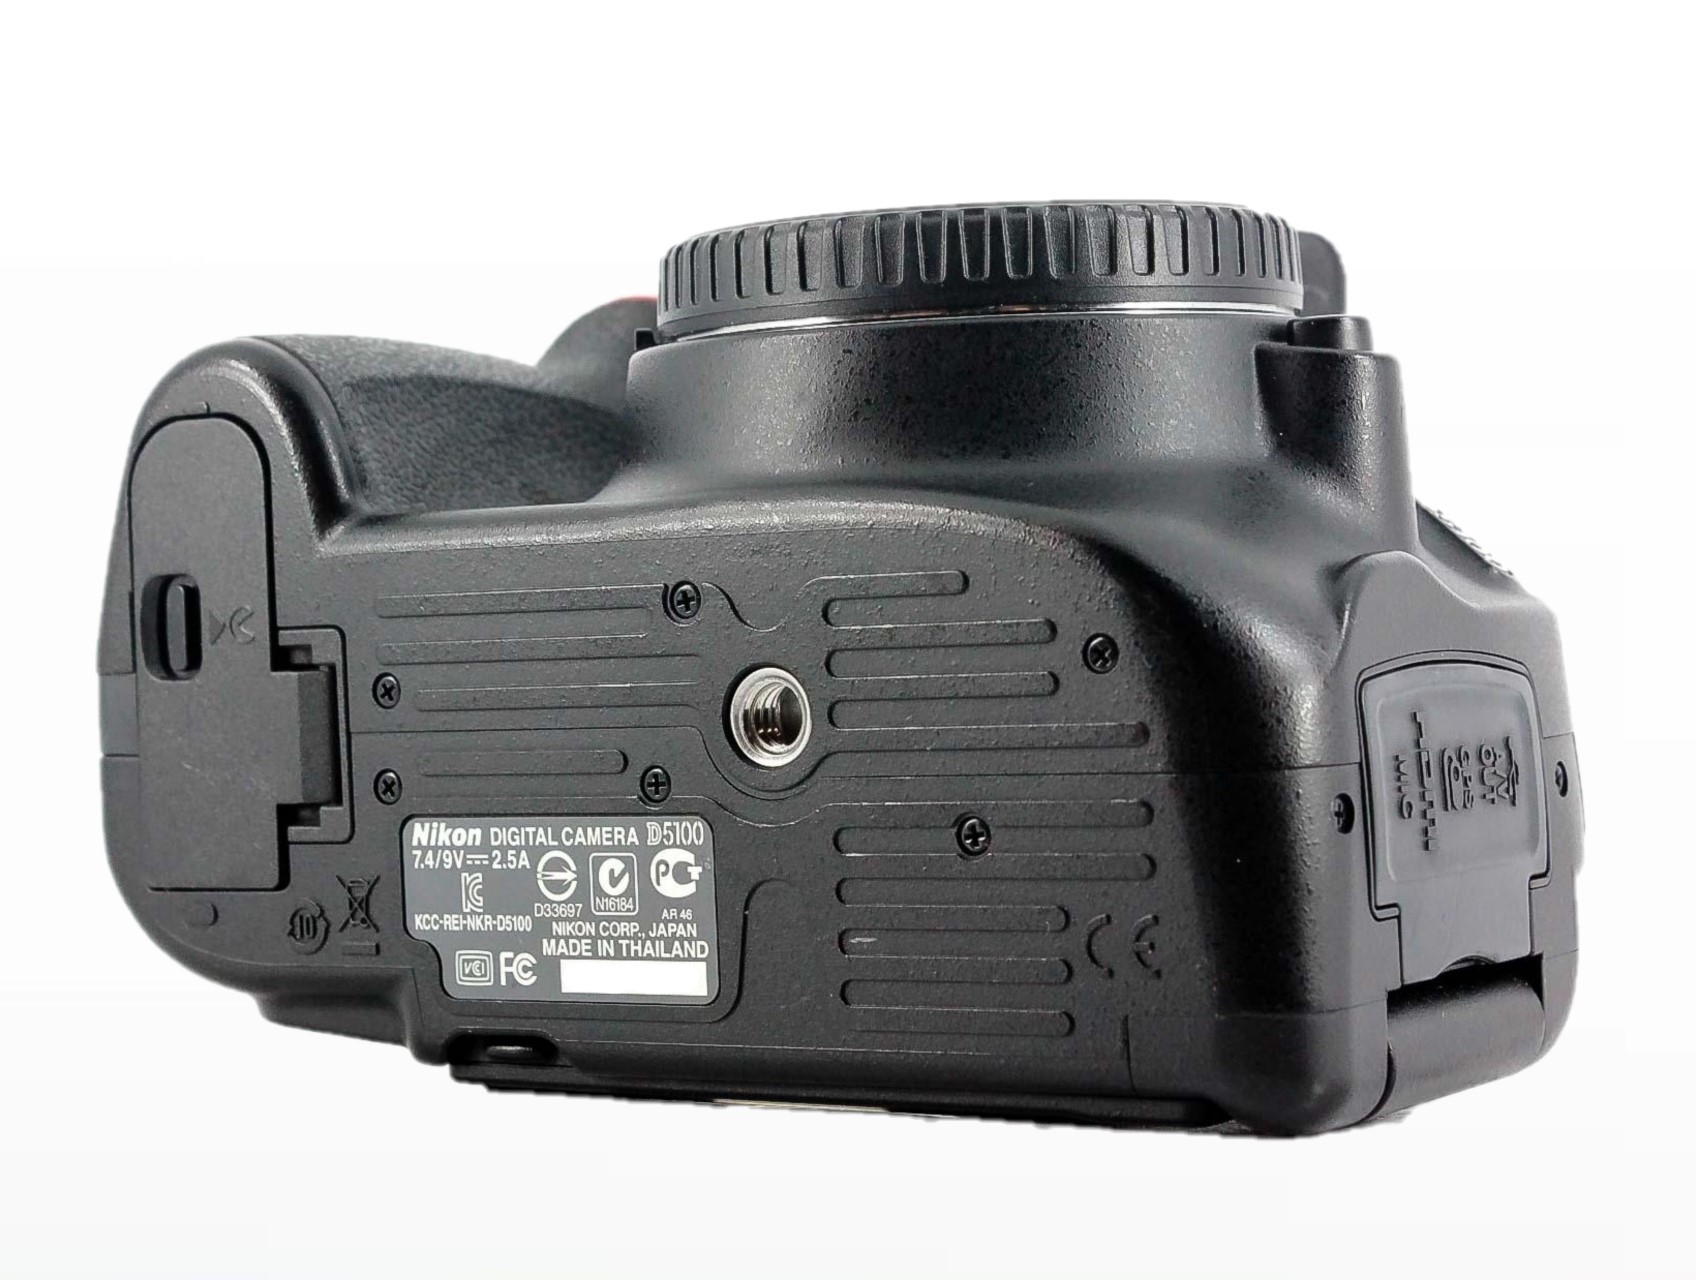 D 16.2MP DSLR Camera - Lenses and Cameras